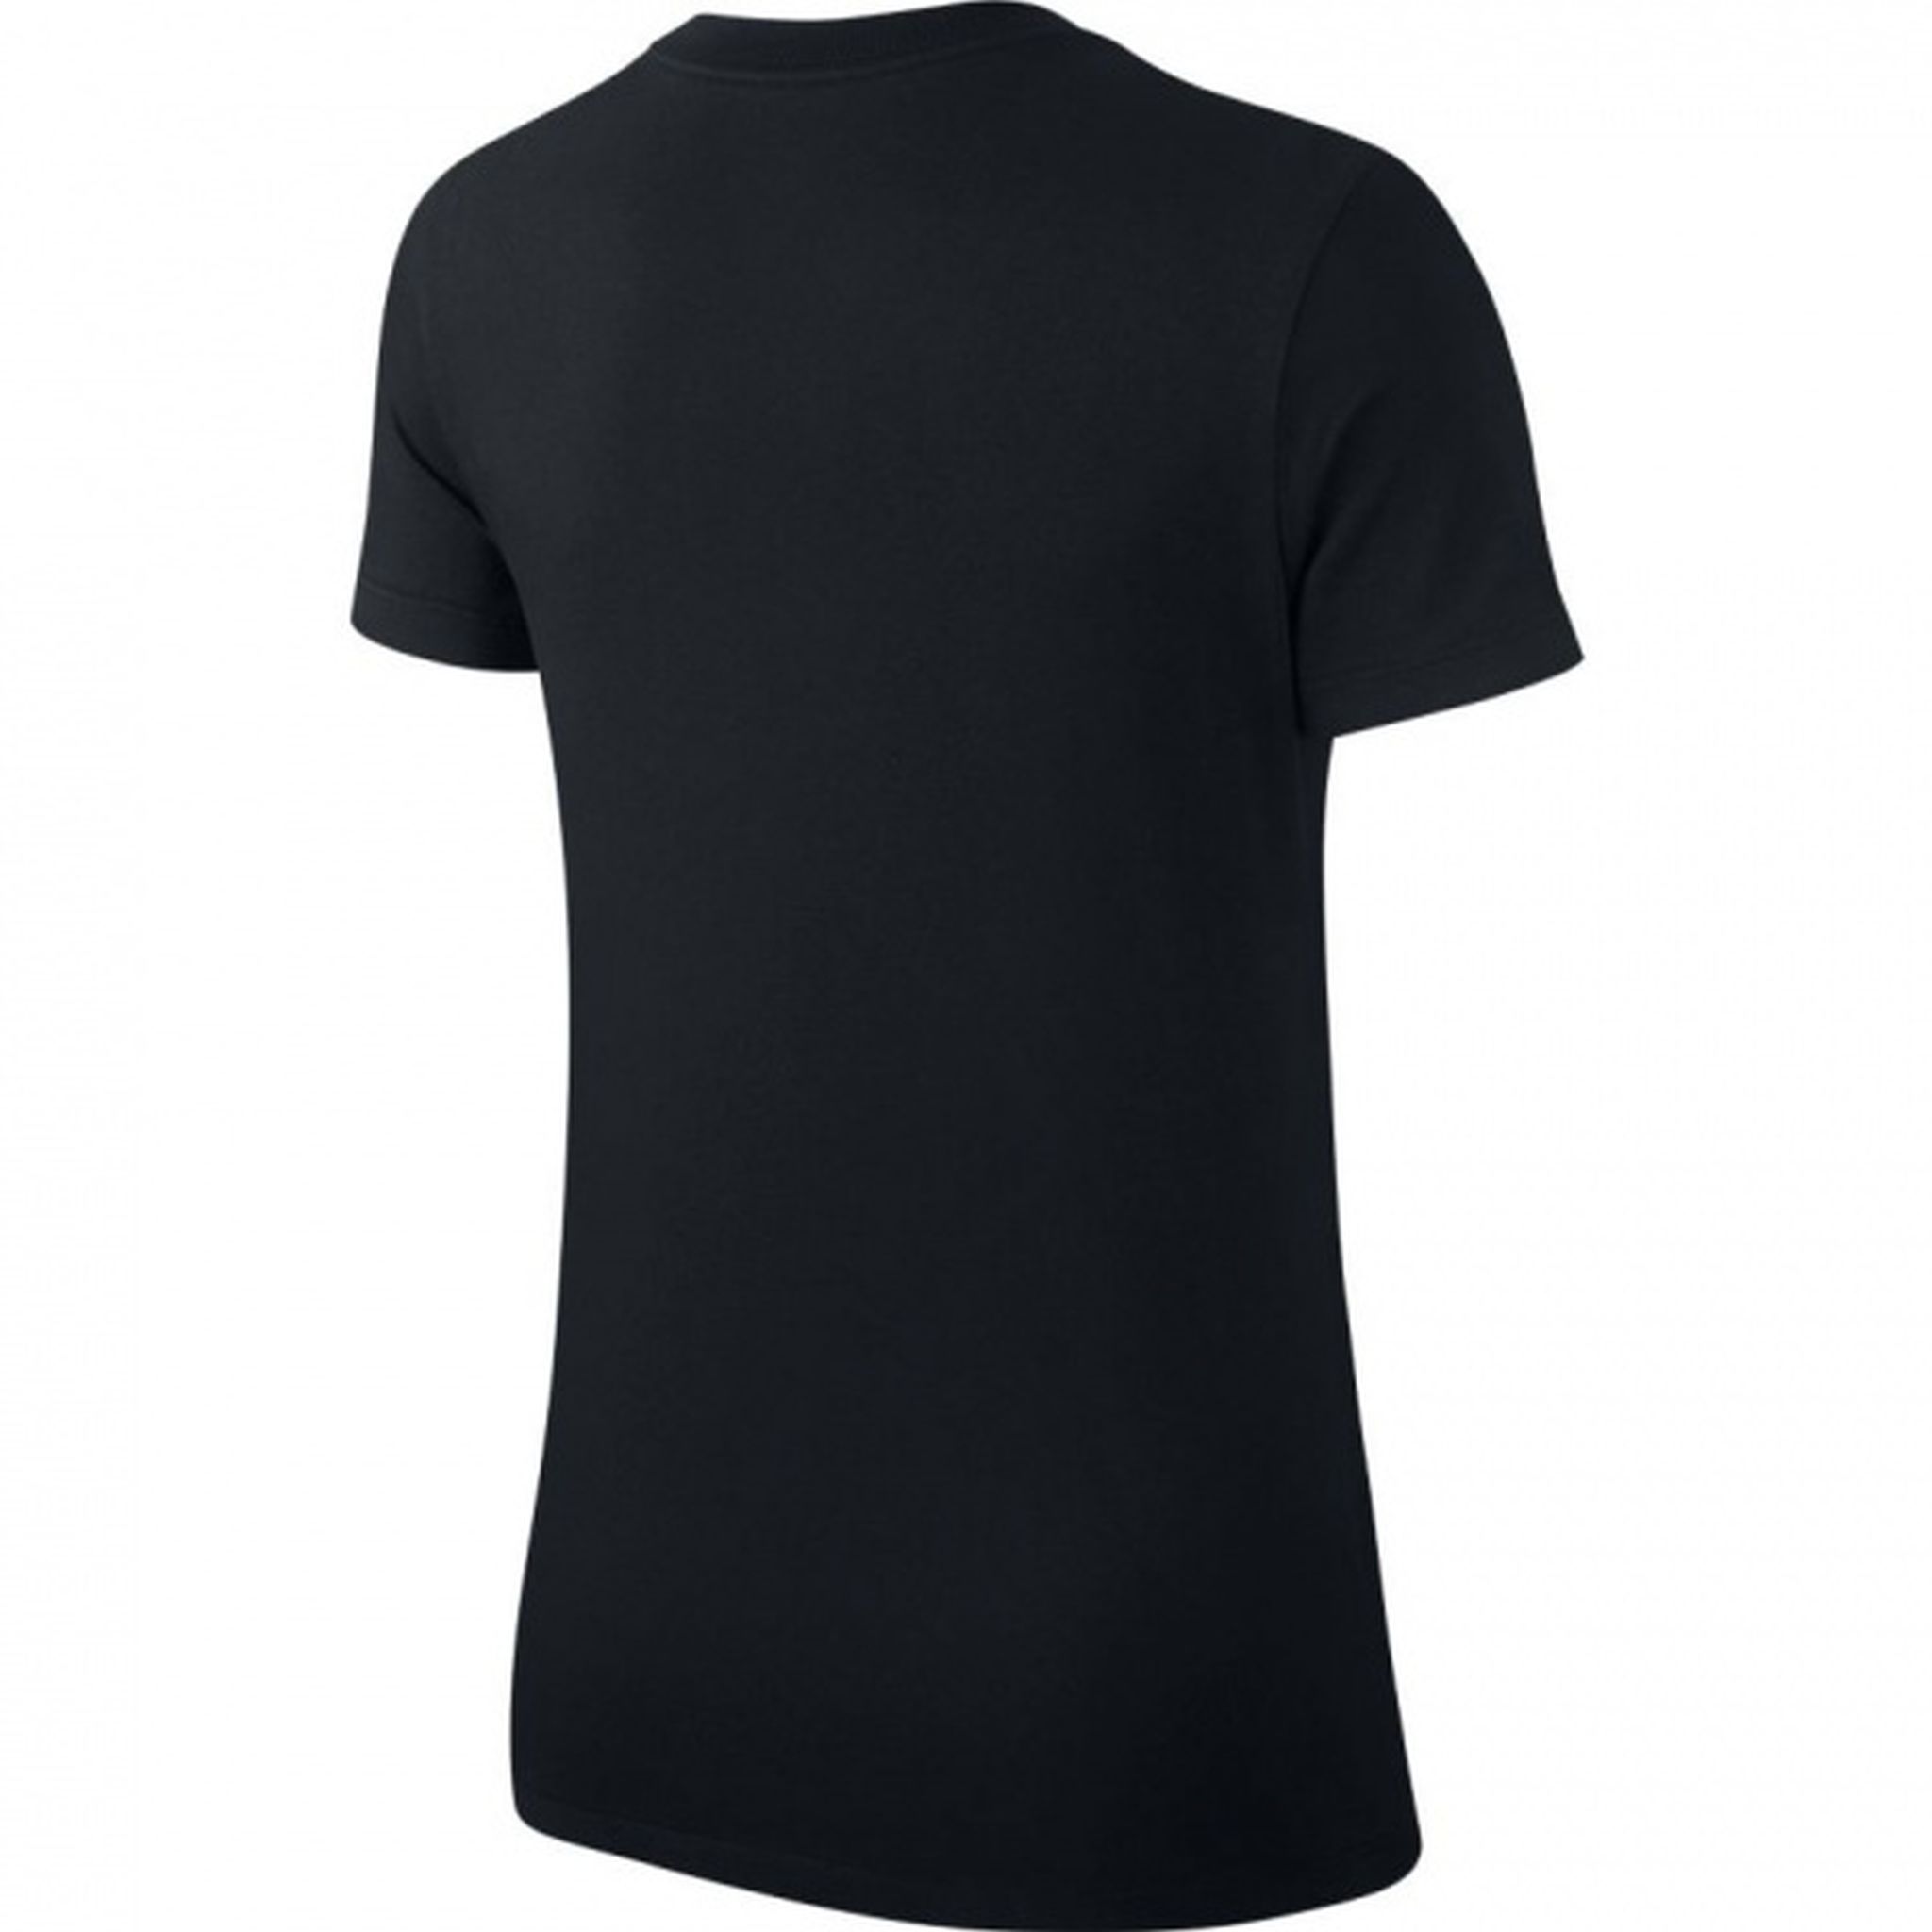 Nike Womens Sportswear Essential Icon T-Shirt